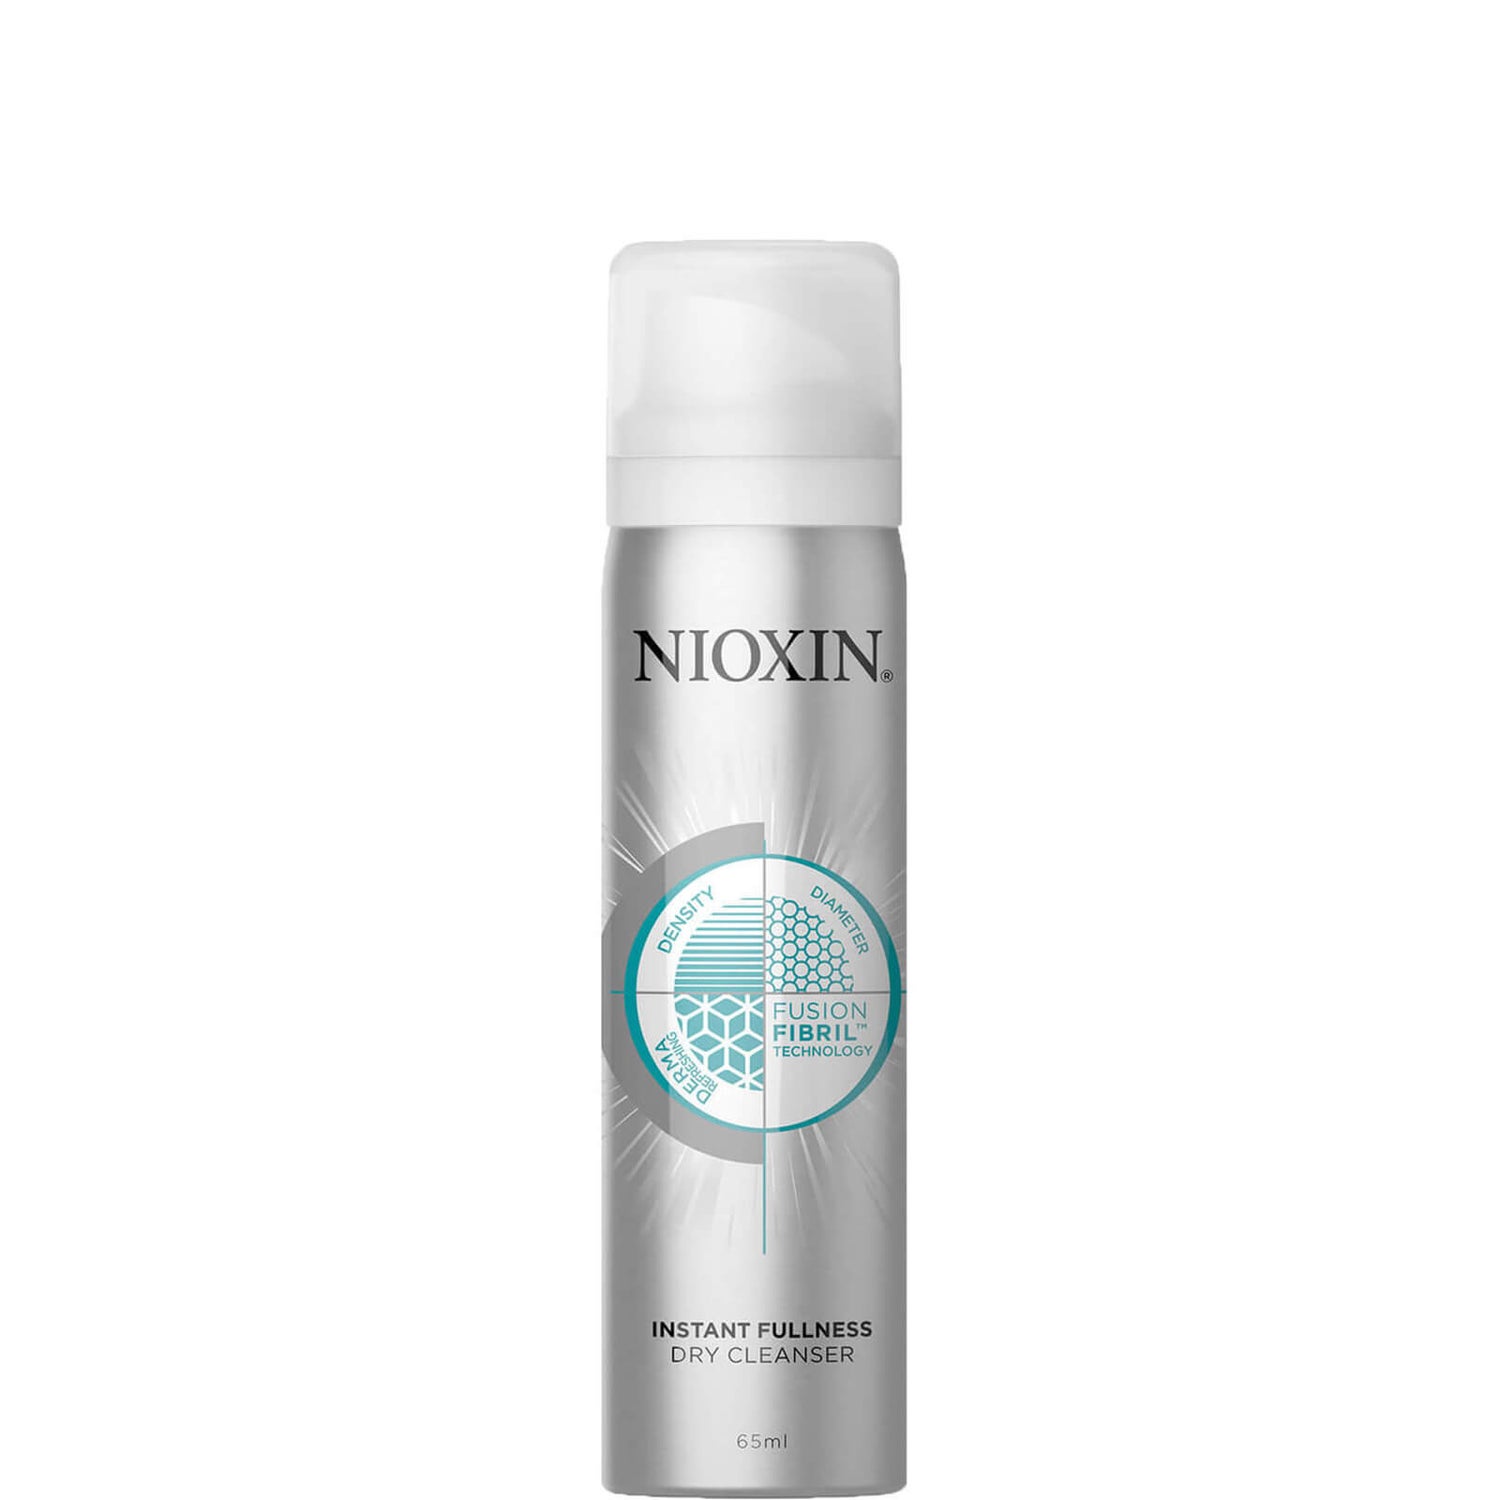 NIOXIN Instant Fullness Dry Shampoo 65ml NIOXIN suchý šampon pro okamžitou plnost 65 ml